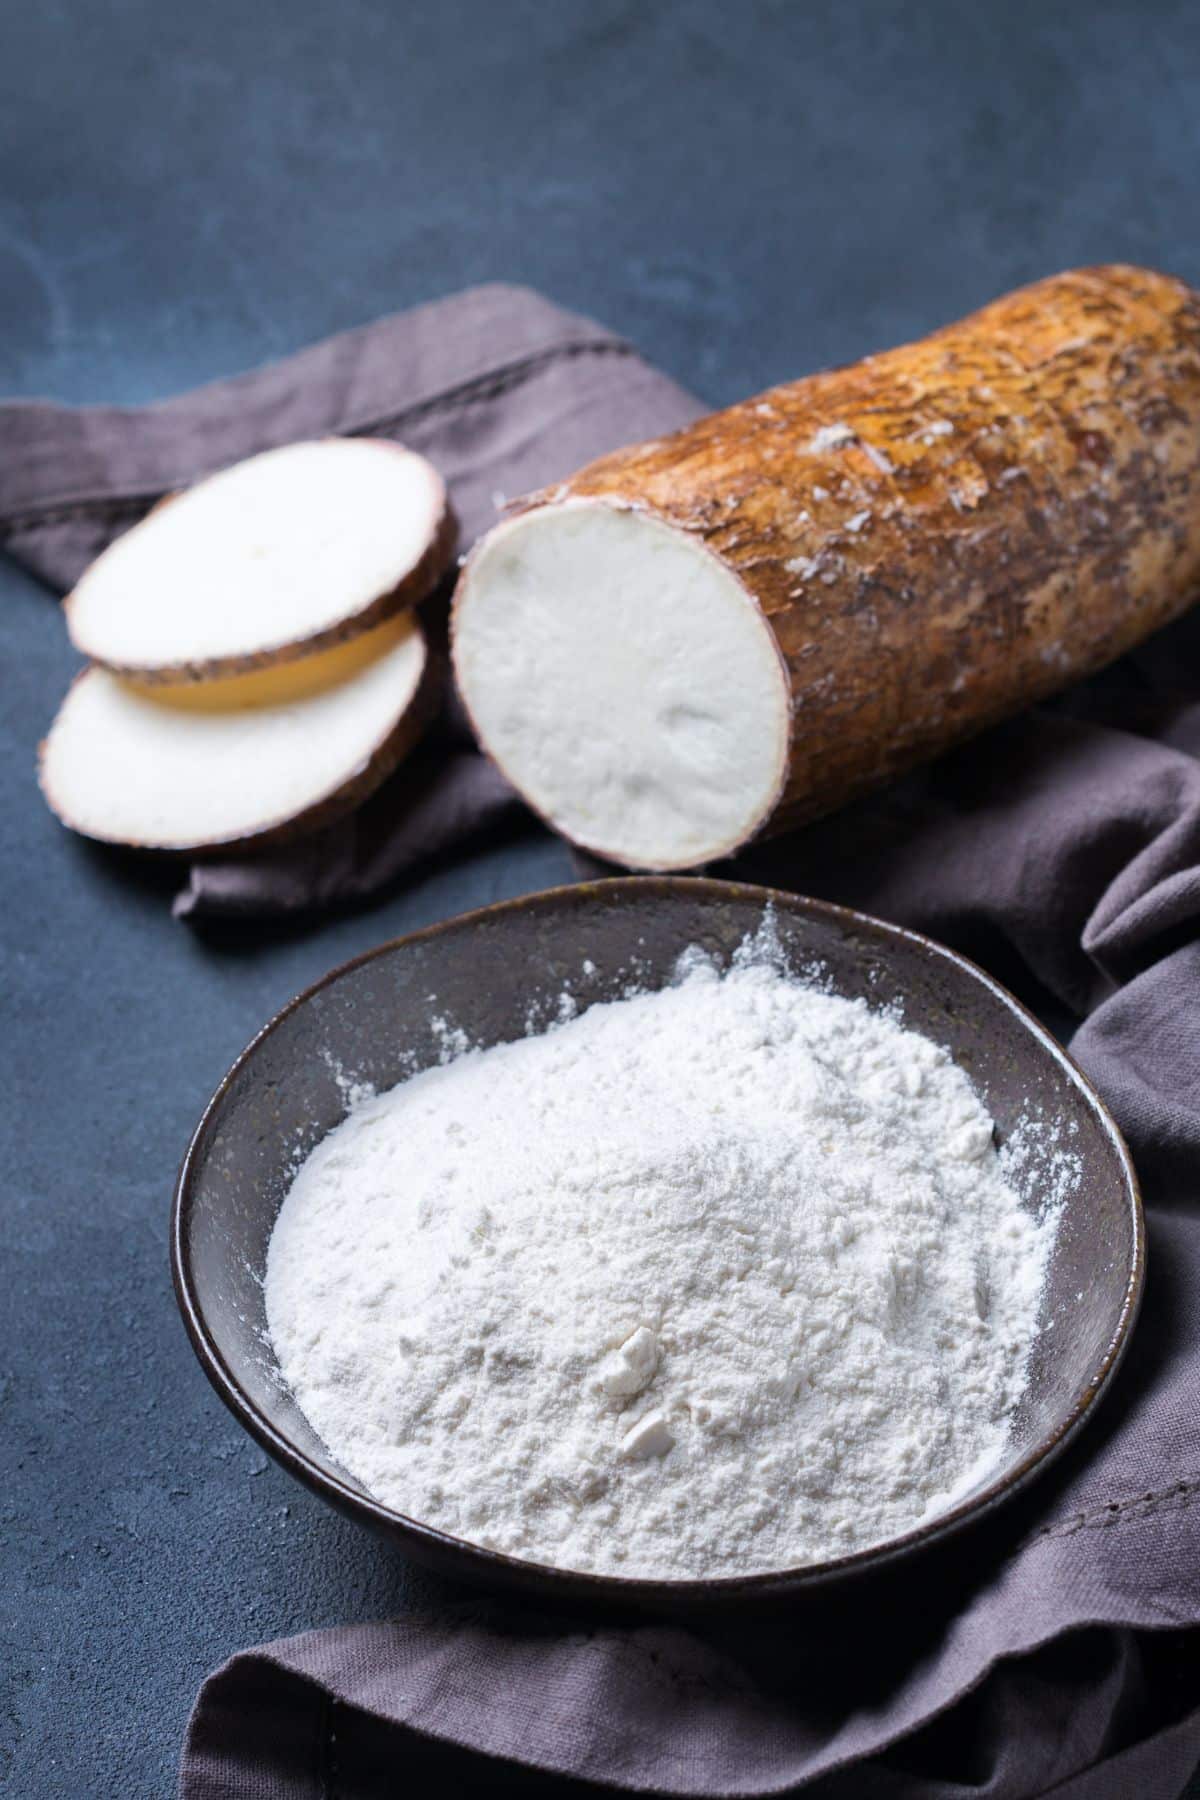 Bowl of cassava flour with cassava root on dark surface.